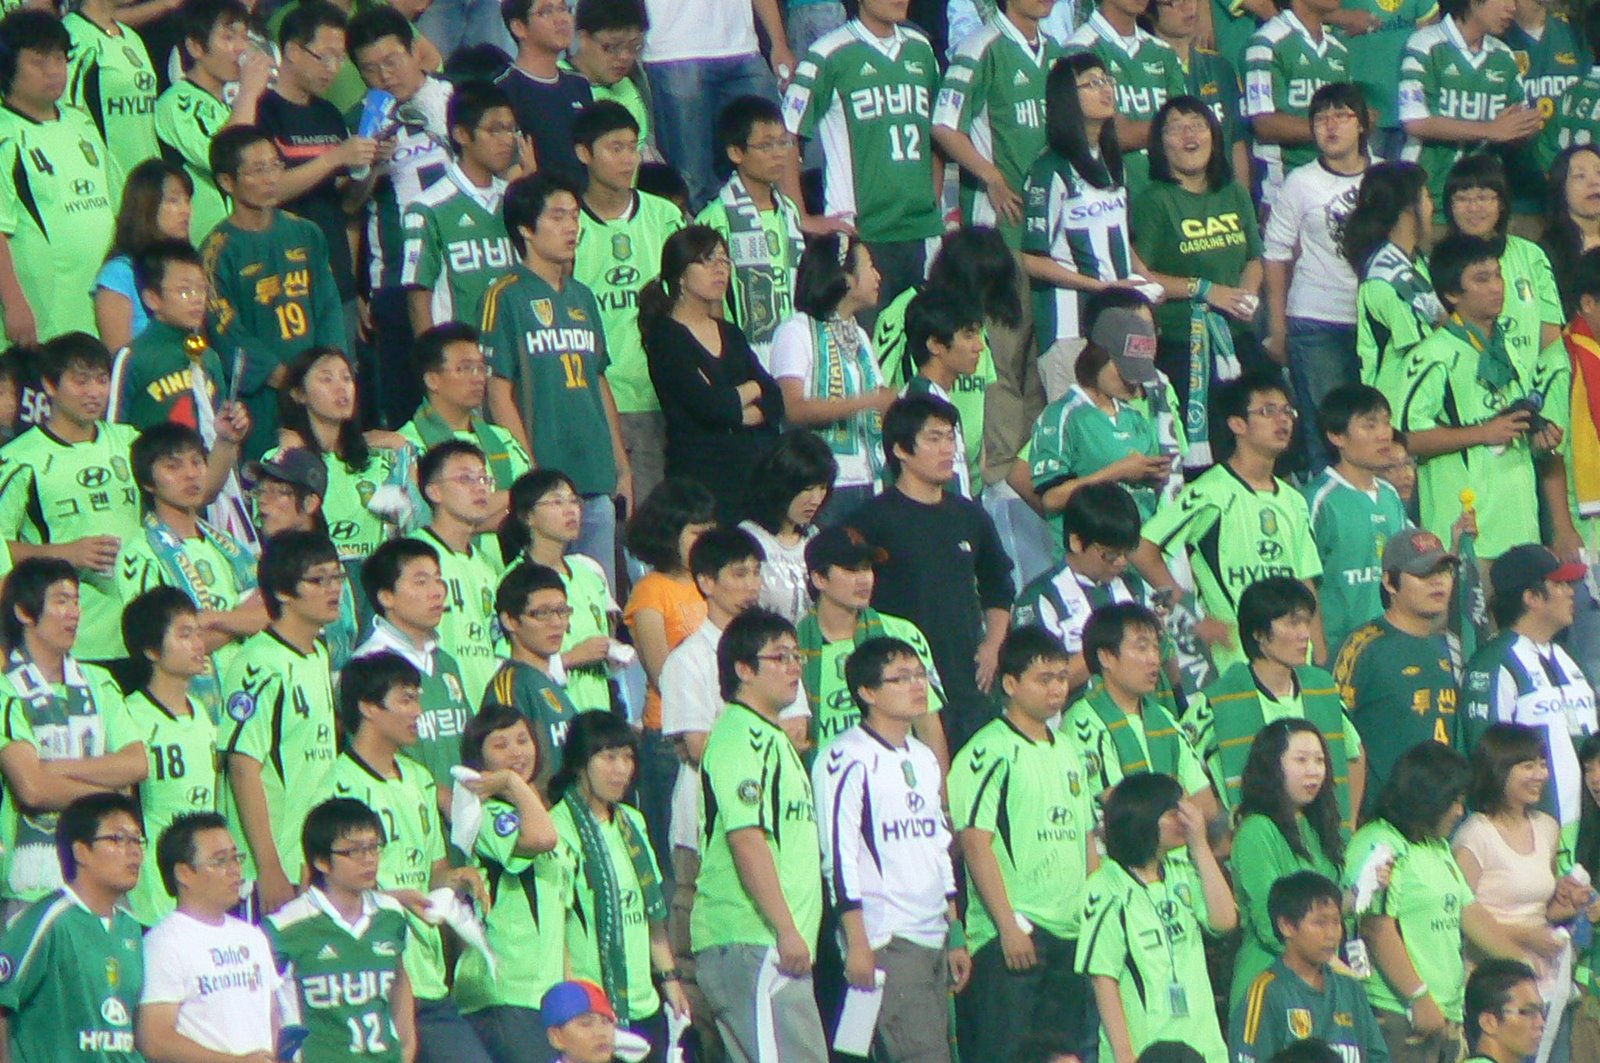 jeonbuk fans look depressed